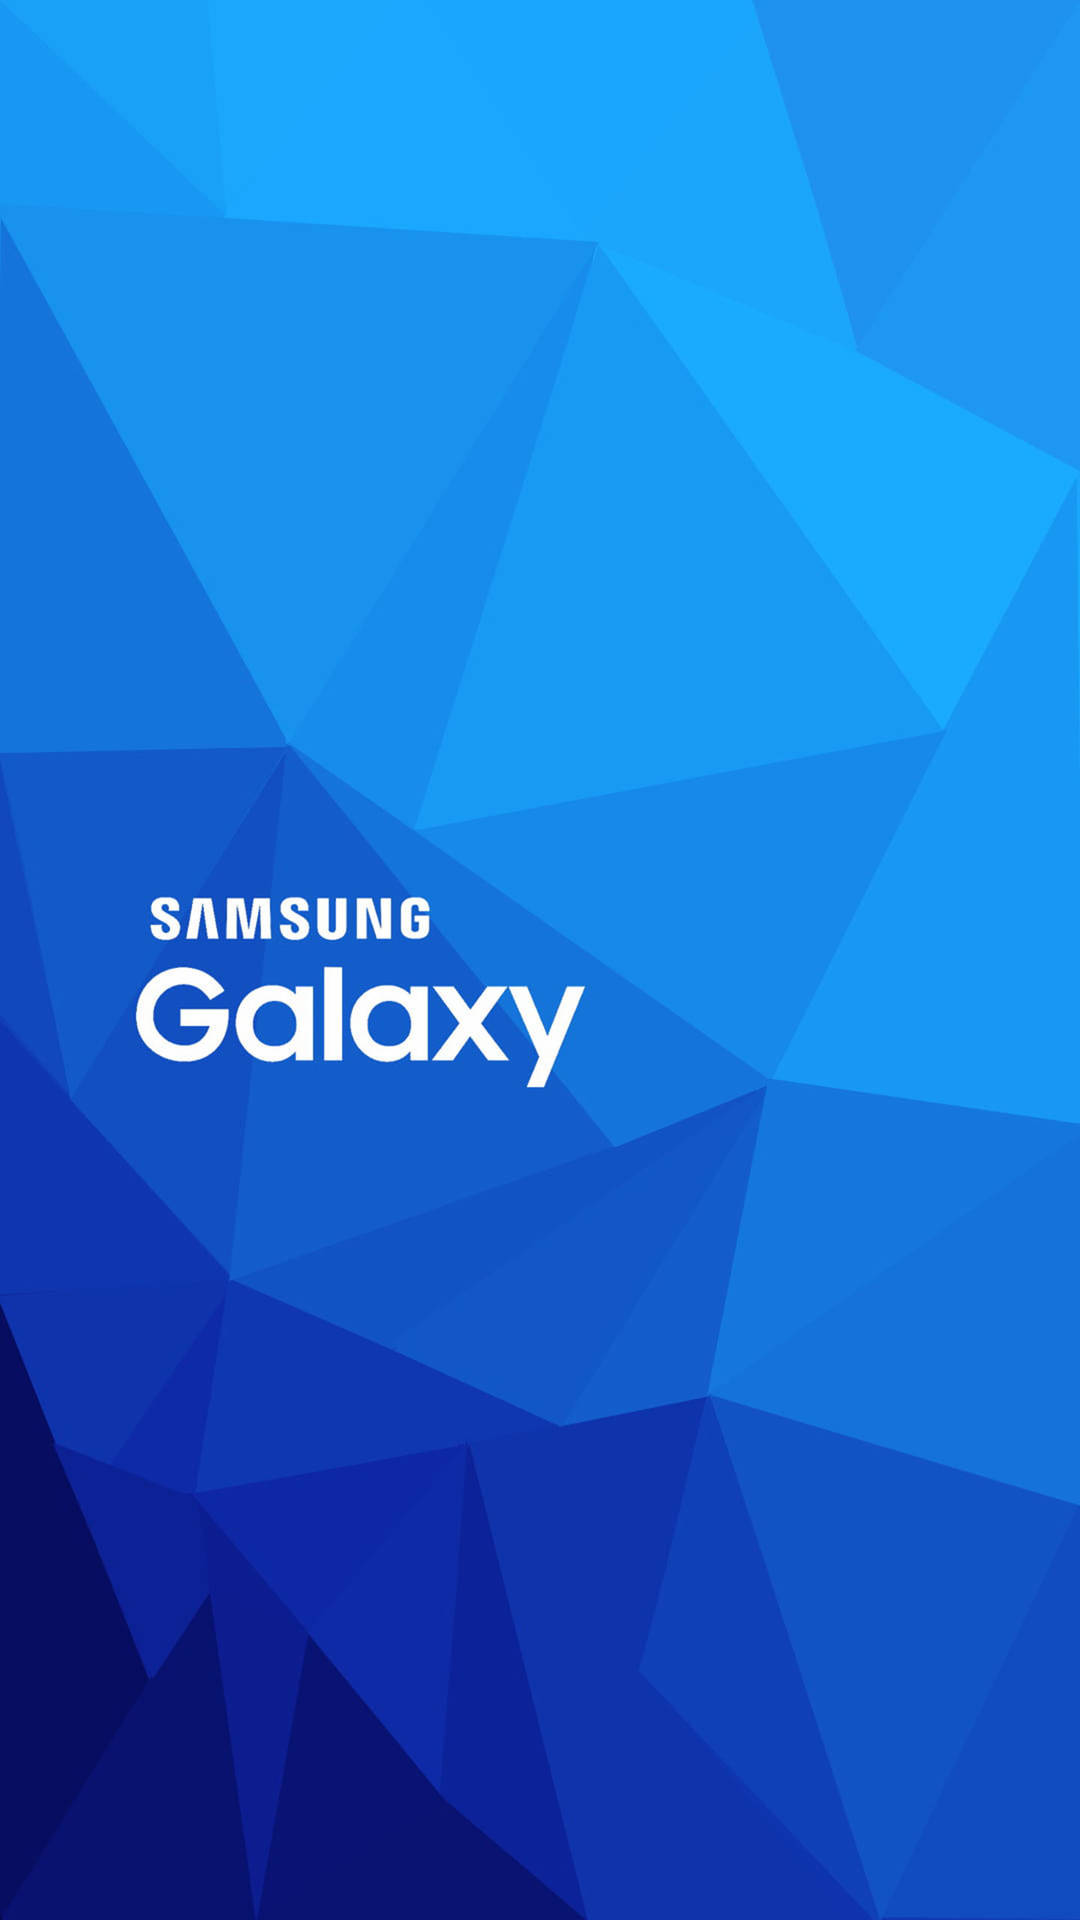 Samsung Galaxy Blue Low Poly Art